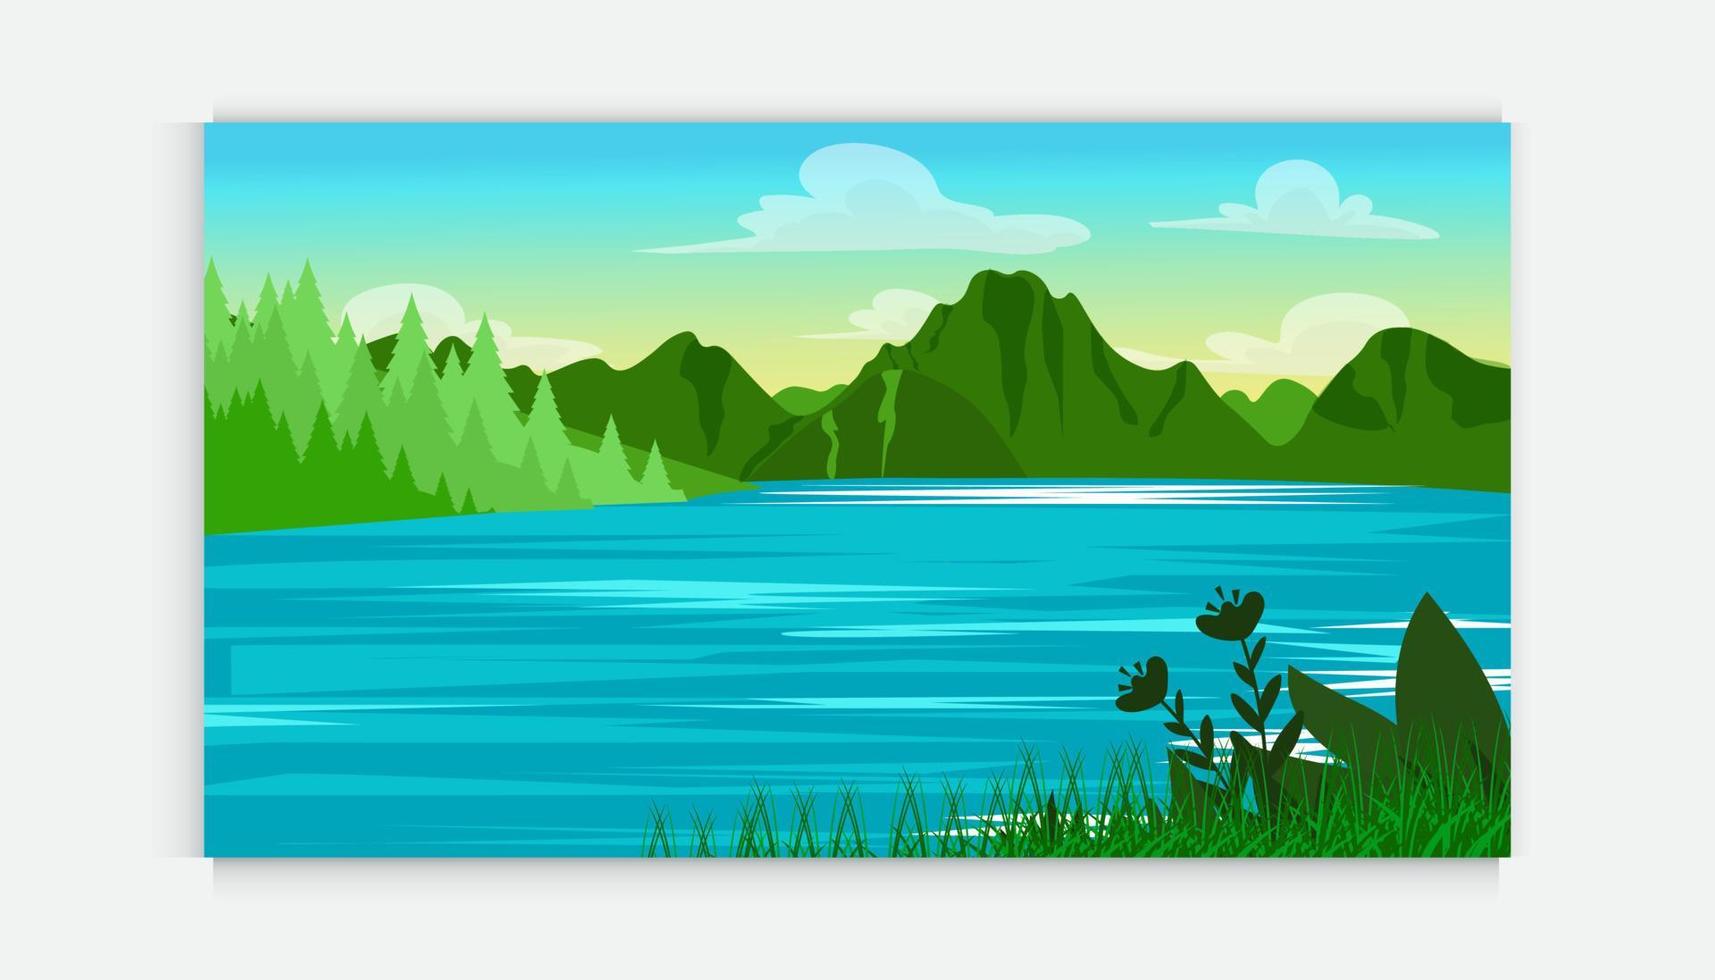 naturaleza escena con arboles , azul cielo ,colina, río. un hermosa lago  paisaje. plano vector campo dibujos animados estilo ilustración de  naturaleza paisaje con arboles y montaña encima río. 20389822 Vector en  Vecteezy